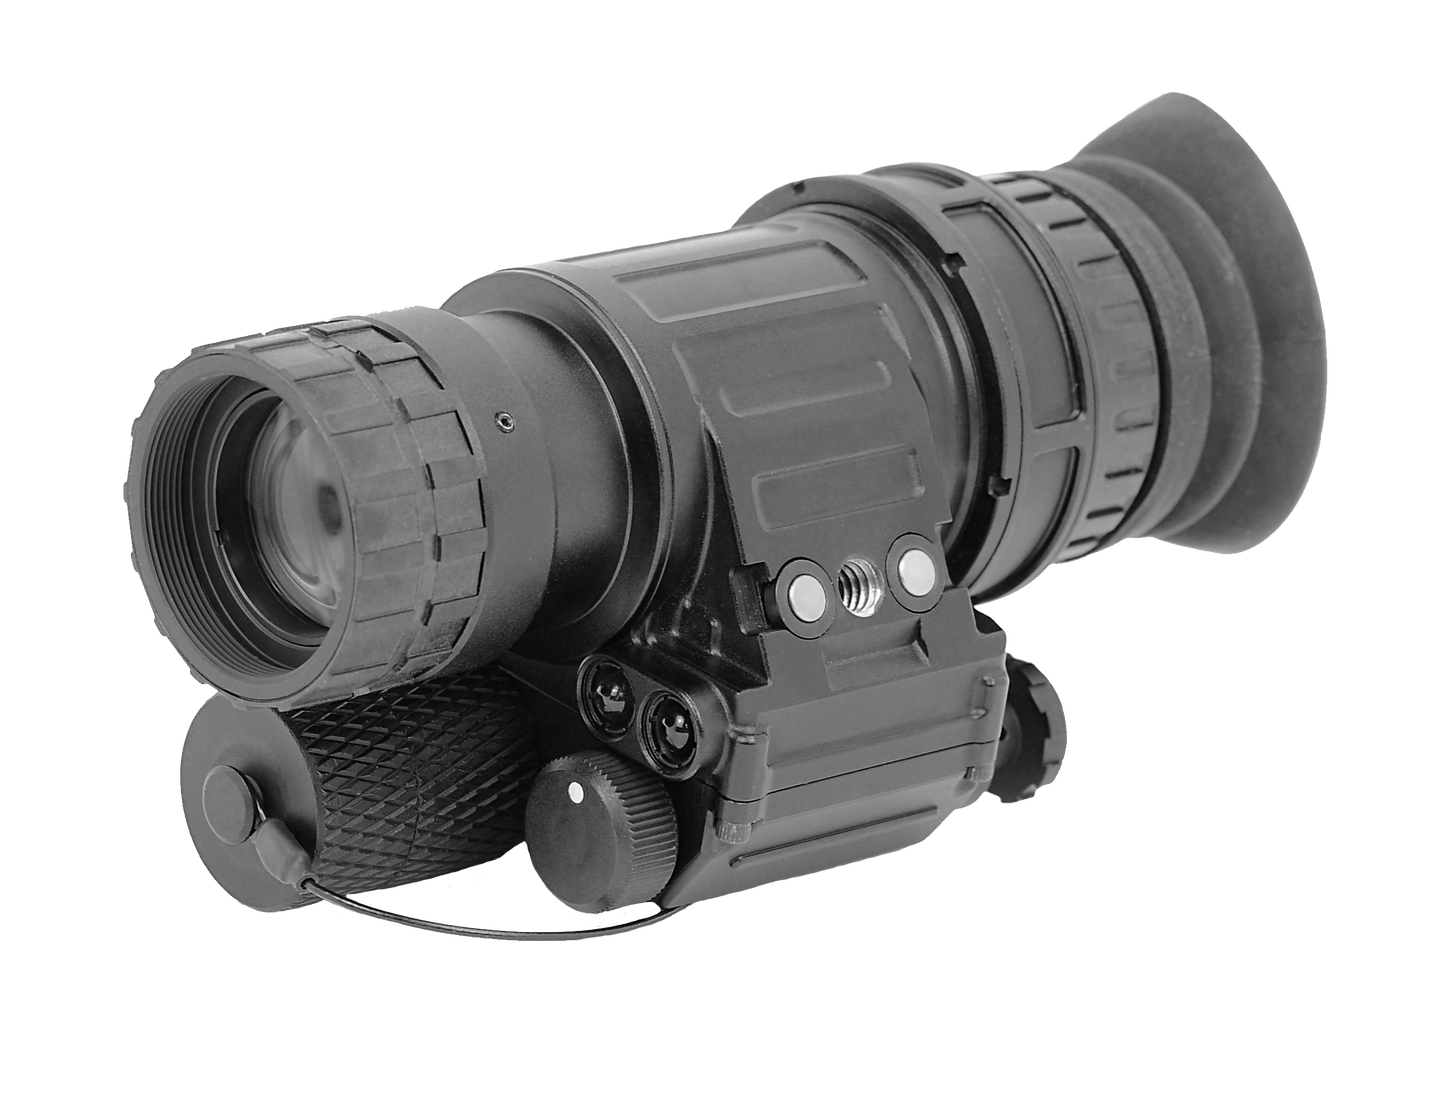 Gen3 PVS-14C Tactical Advanced Night Vision Monocular